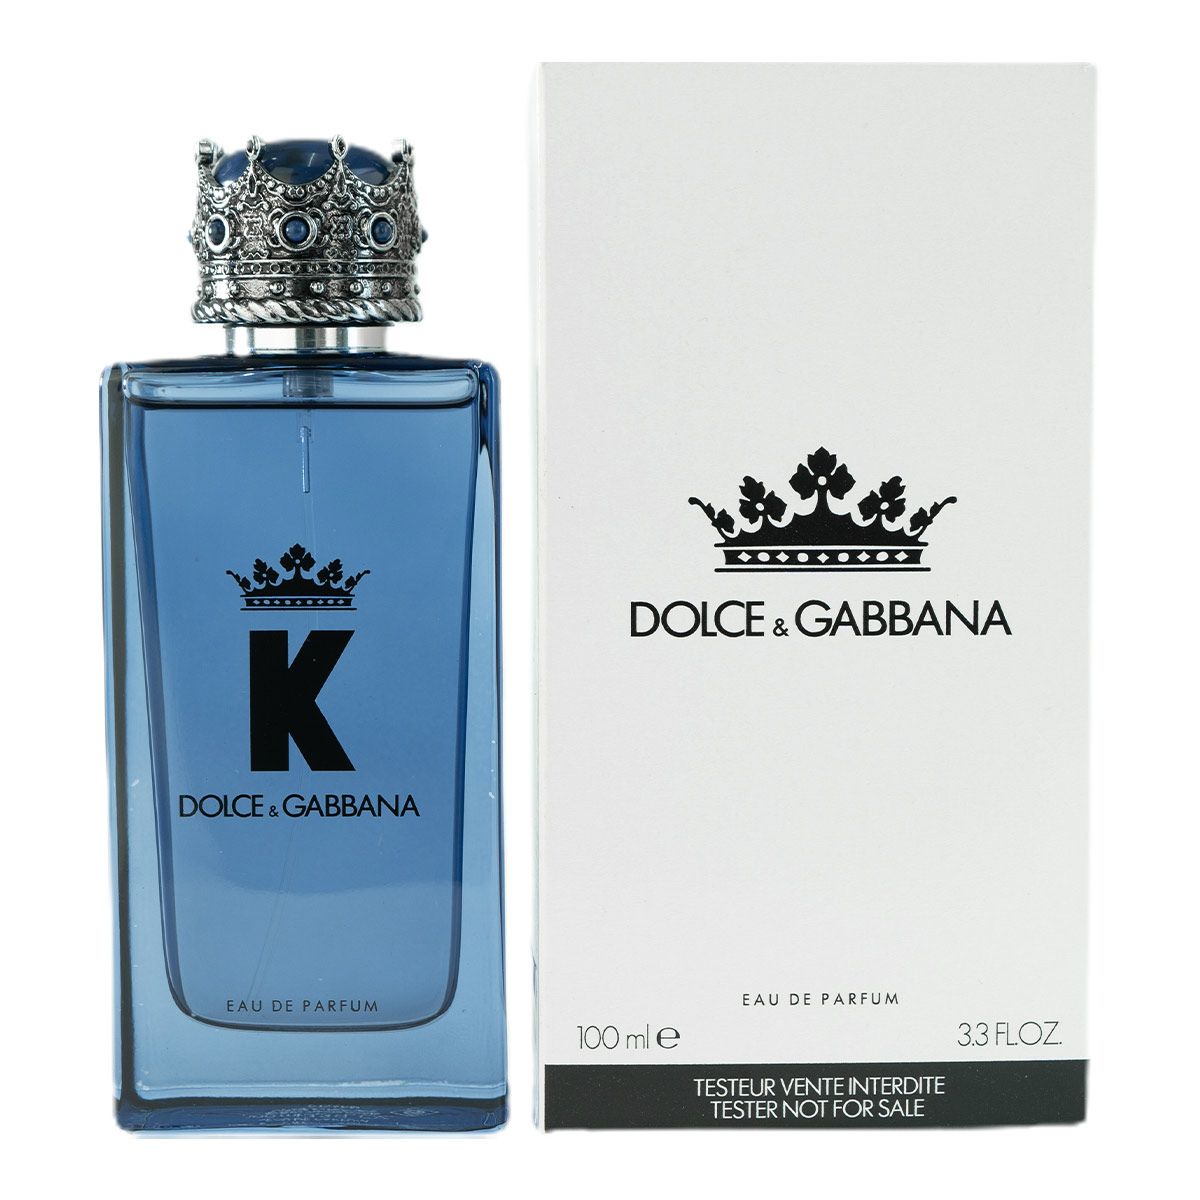  Dolce & Gabbana K Eau de Parfum 